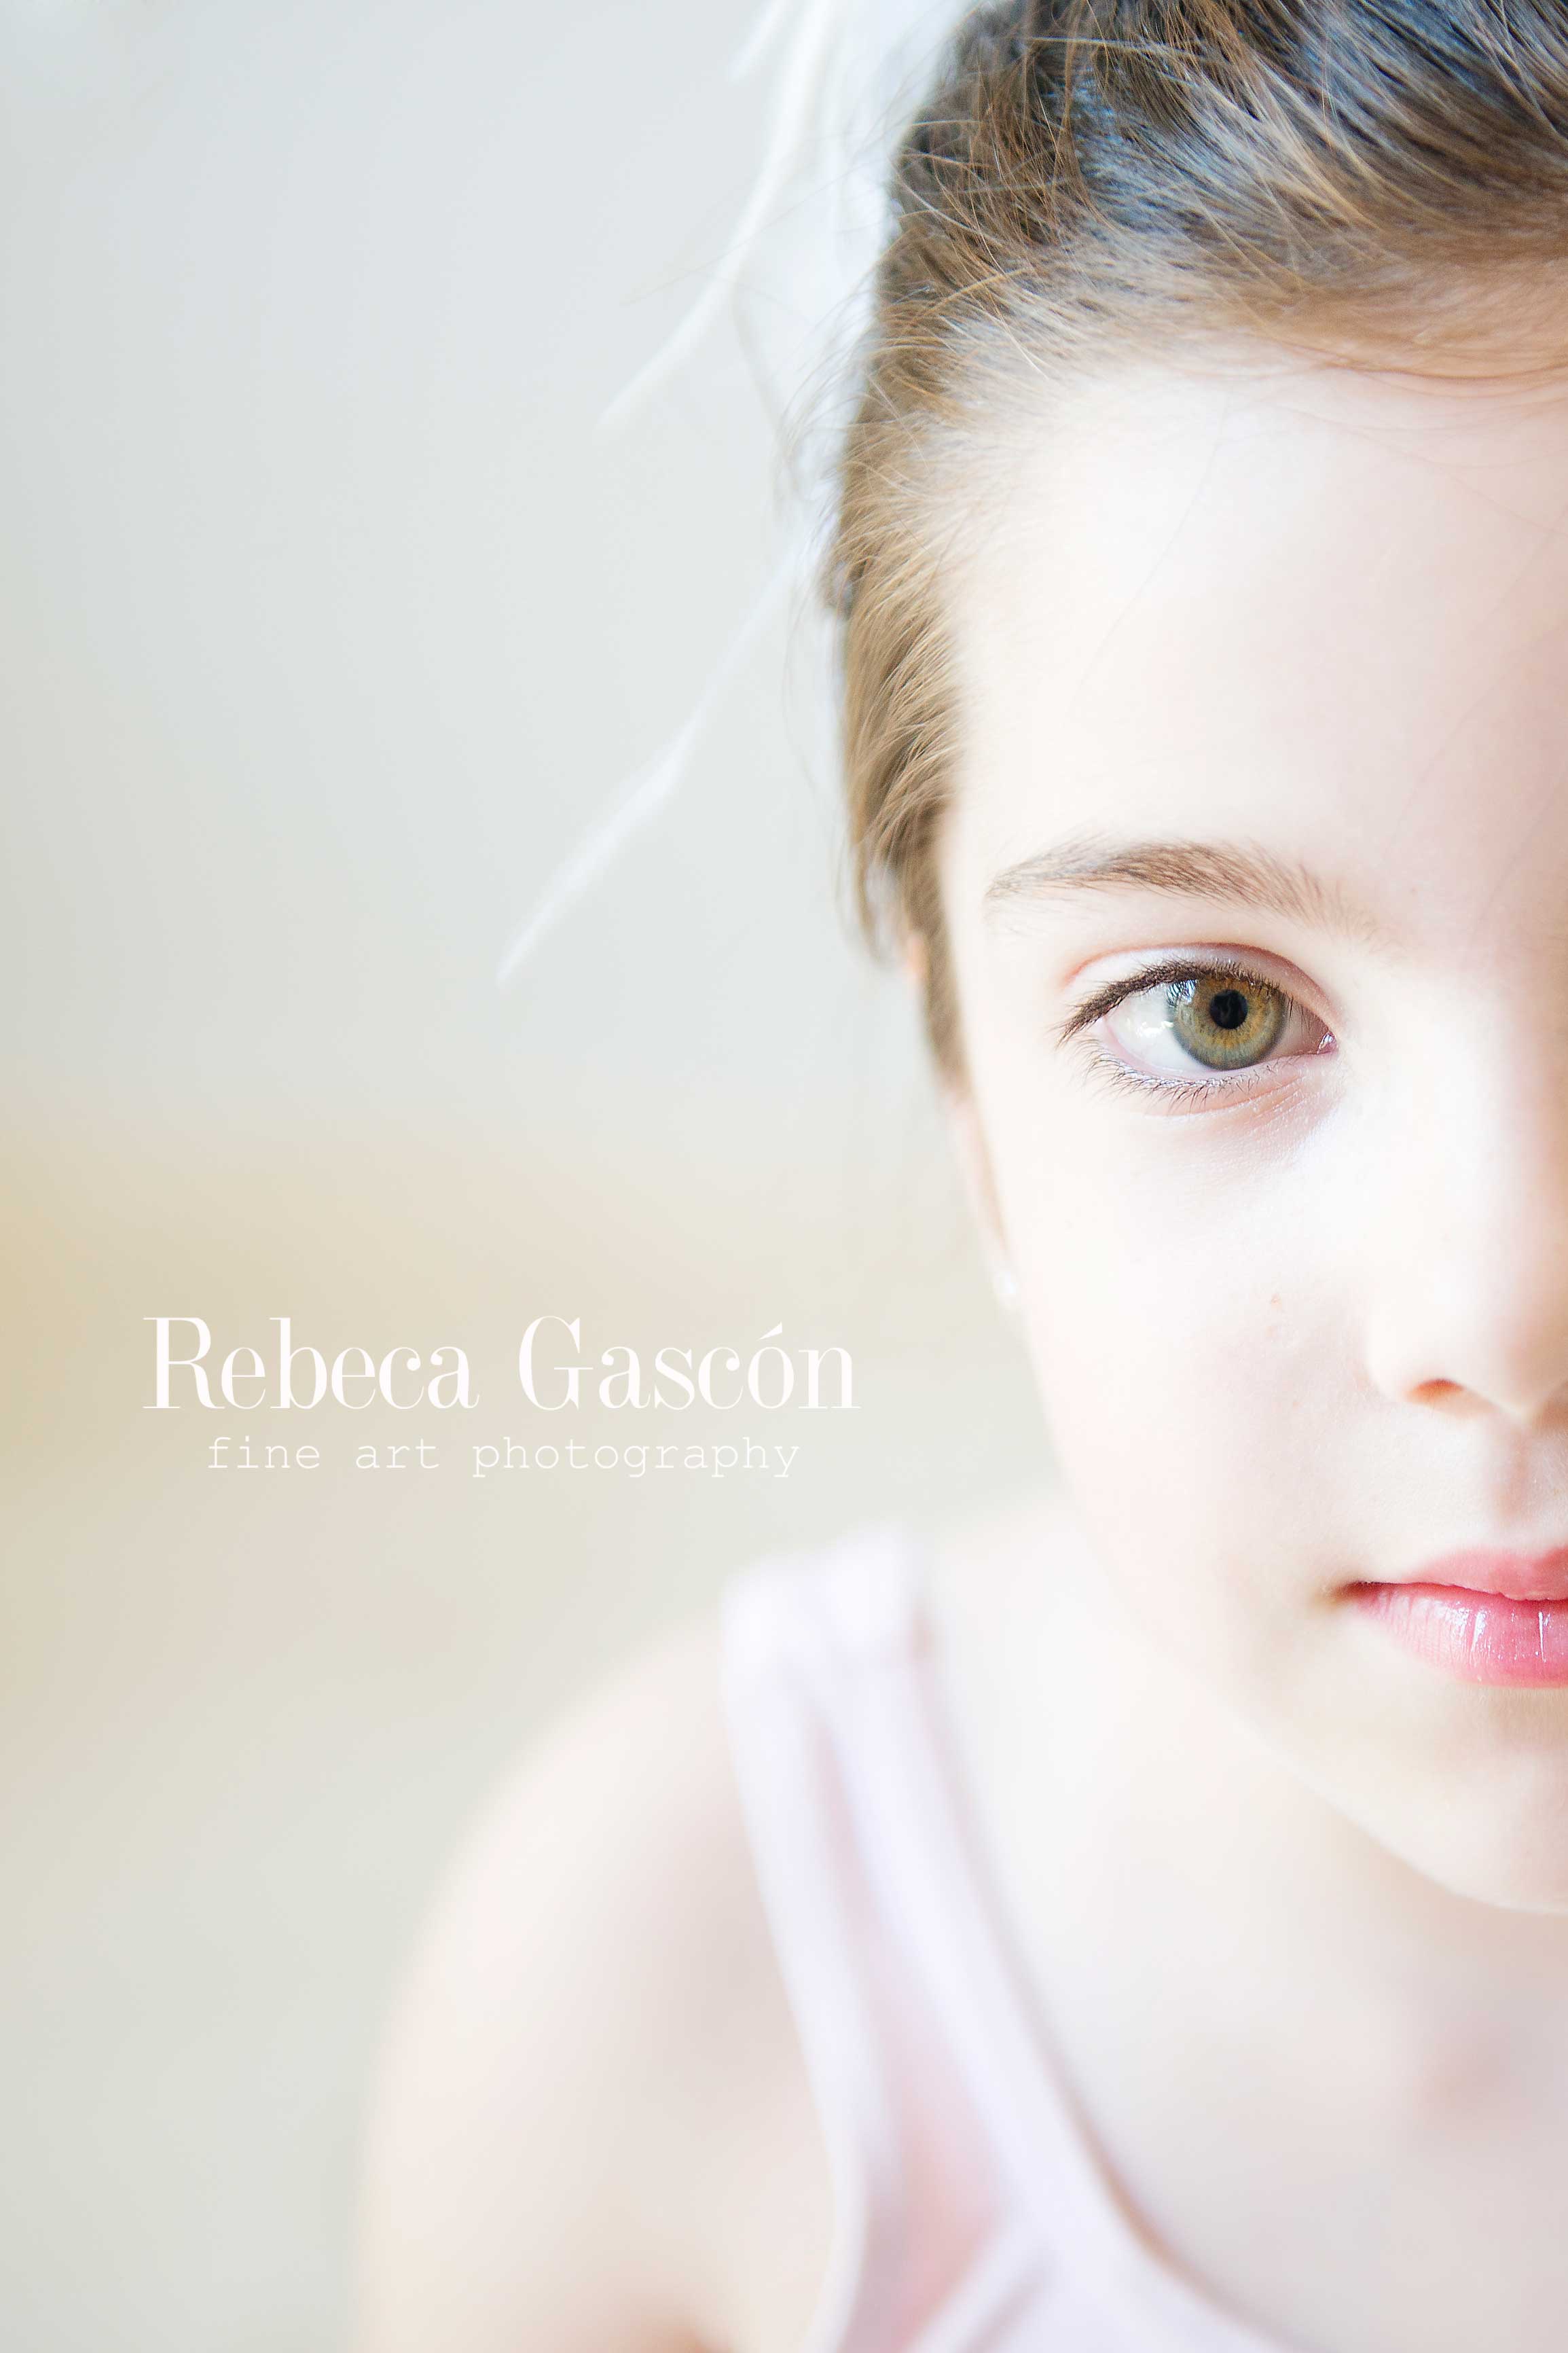 rebeca-gascon-fotografa-infantil